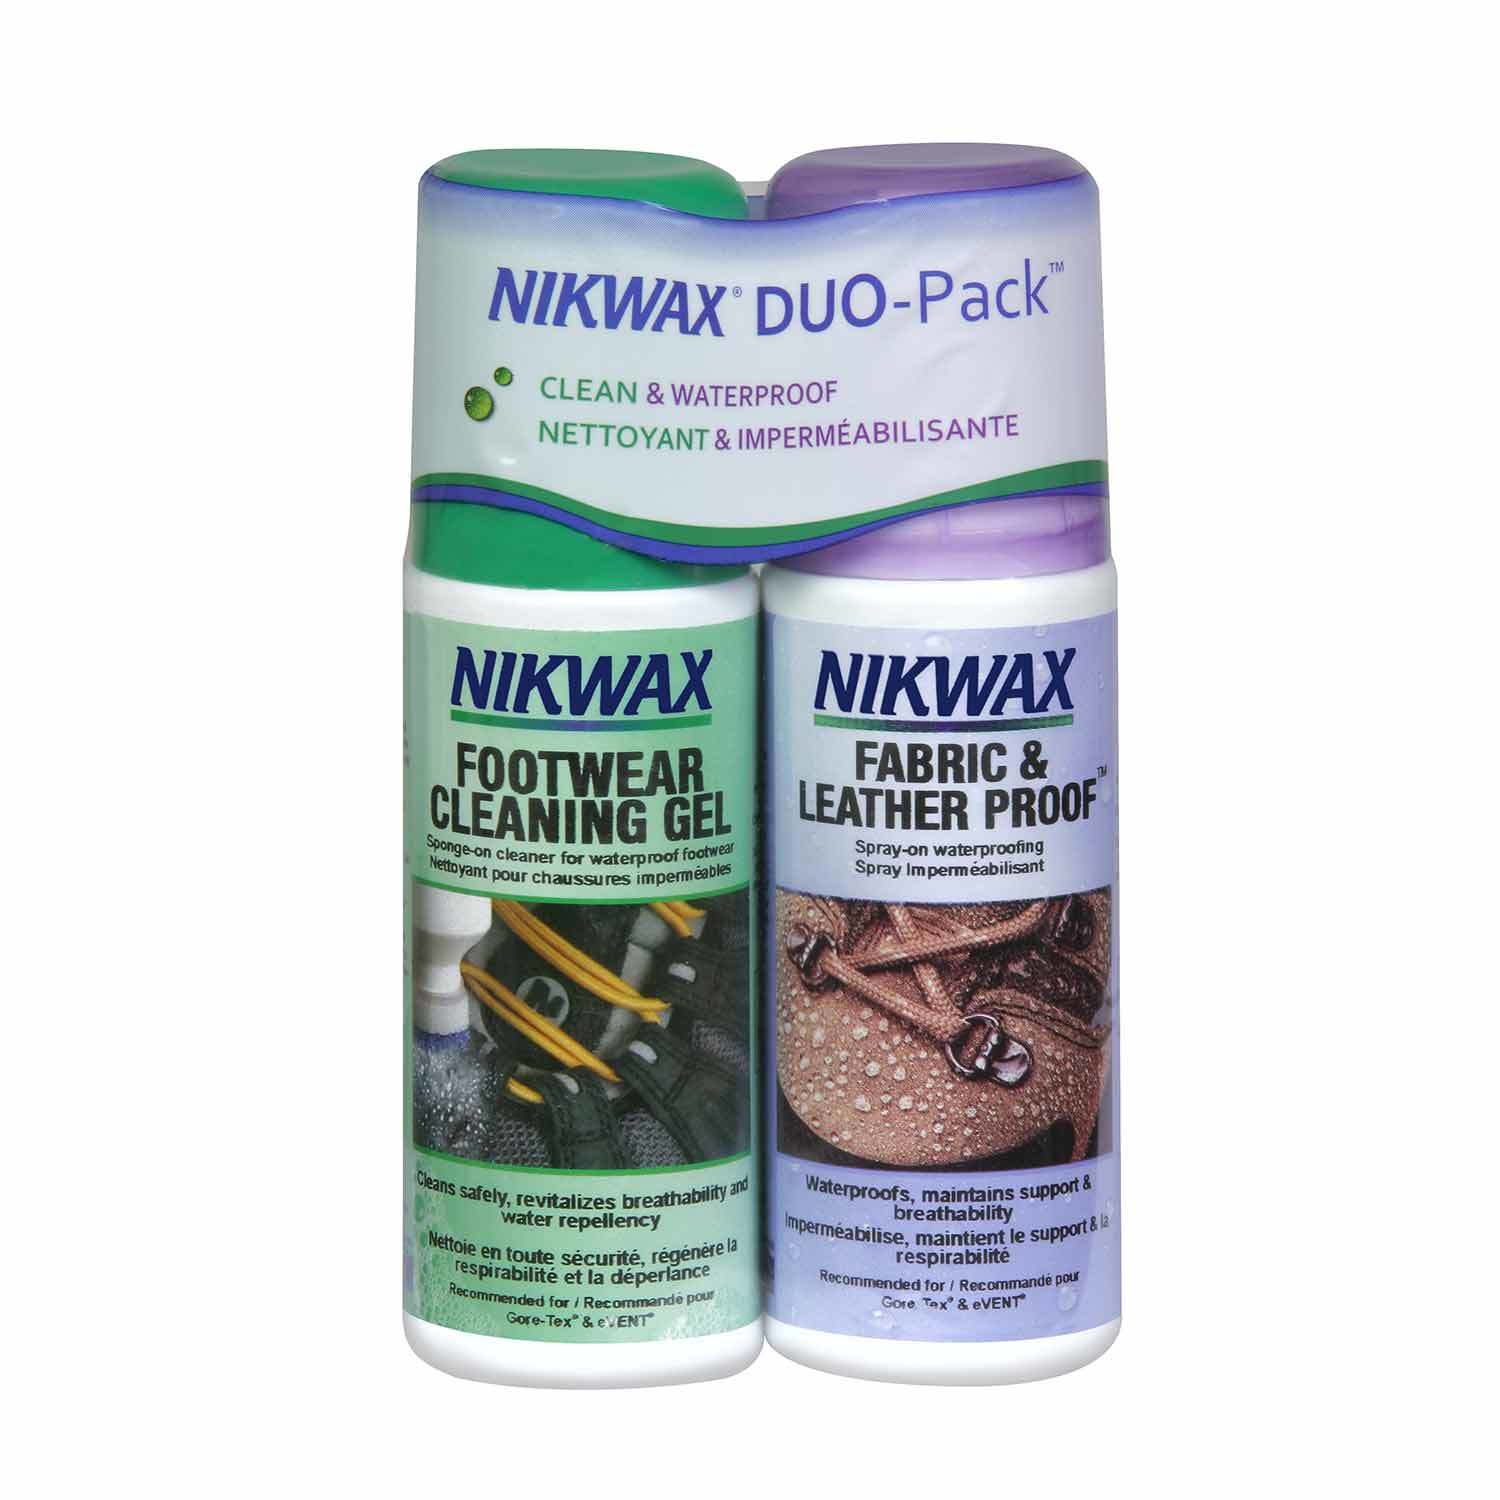 Nikwax Combo Packs